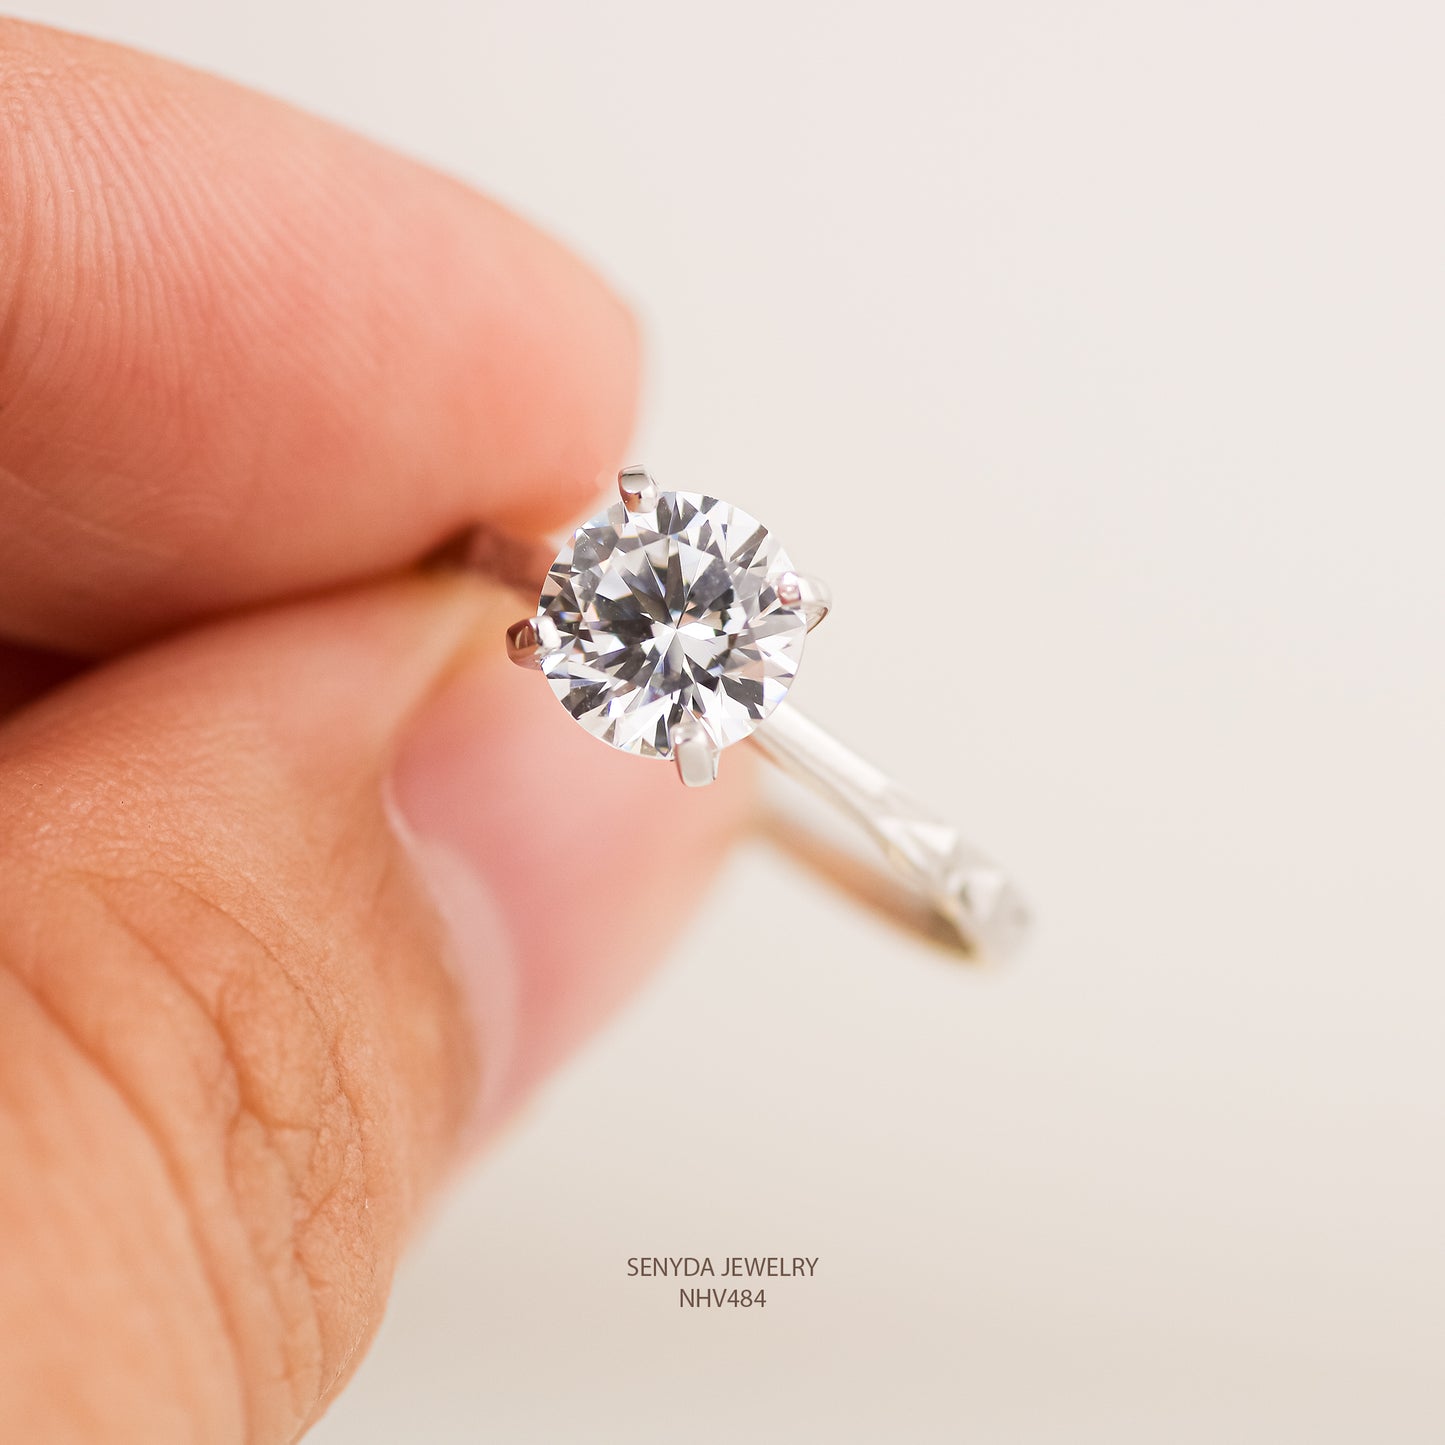 Senyda 10K Solid Gold Special Ring - "BIG LOVE" RING